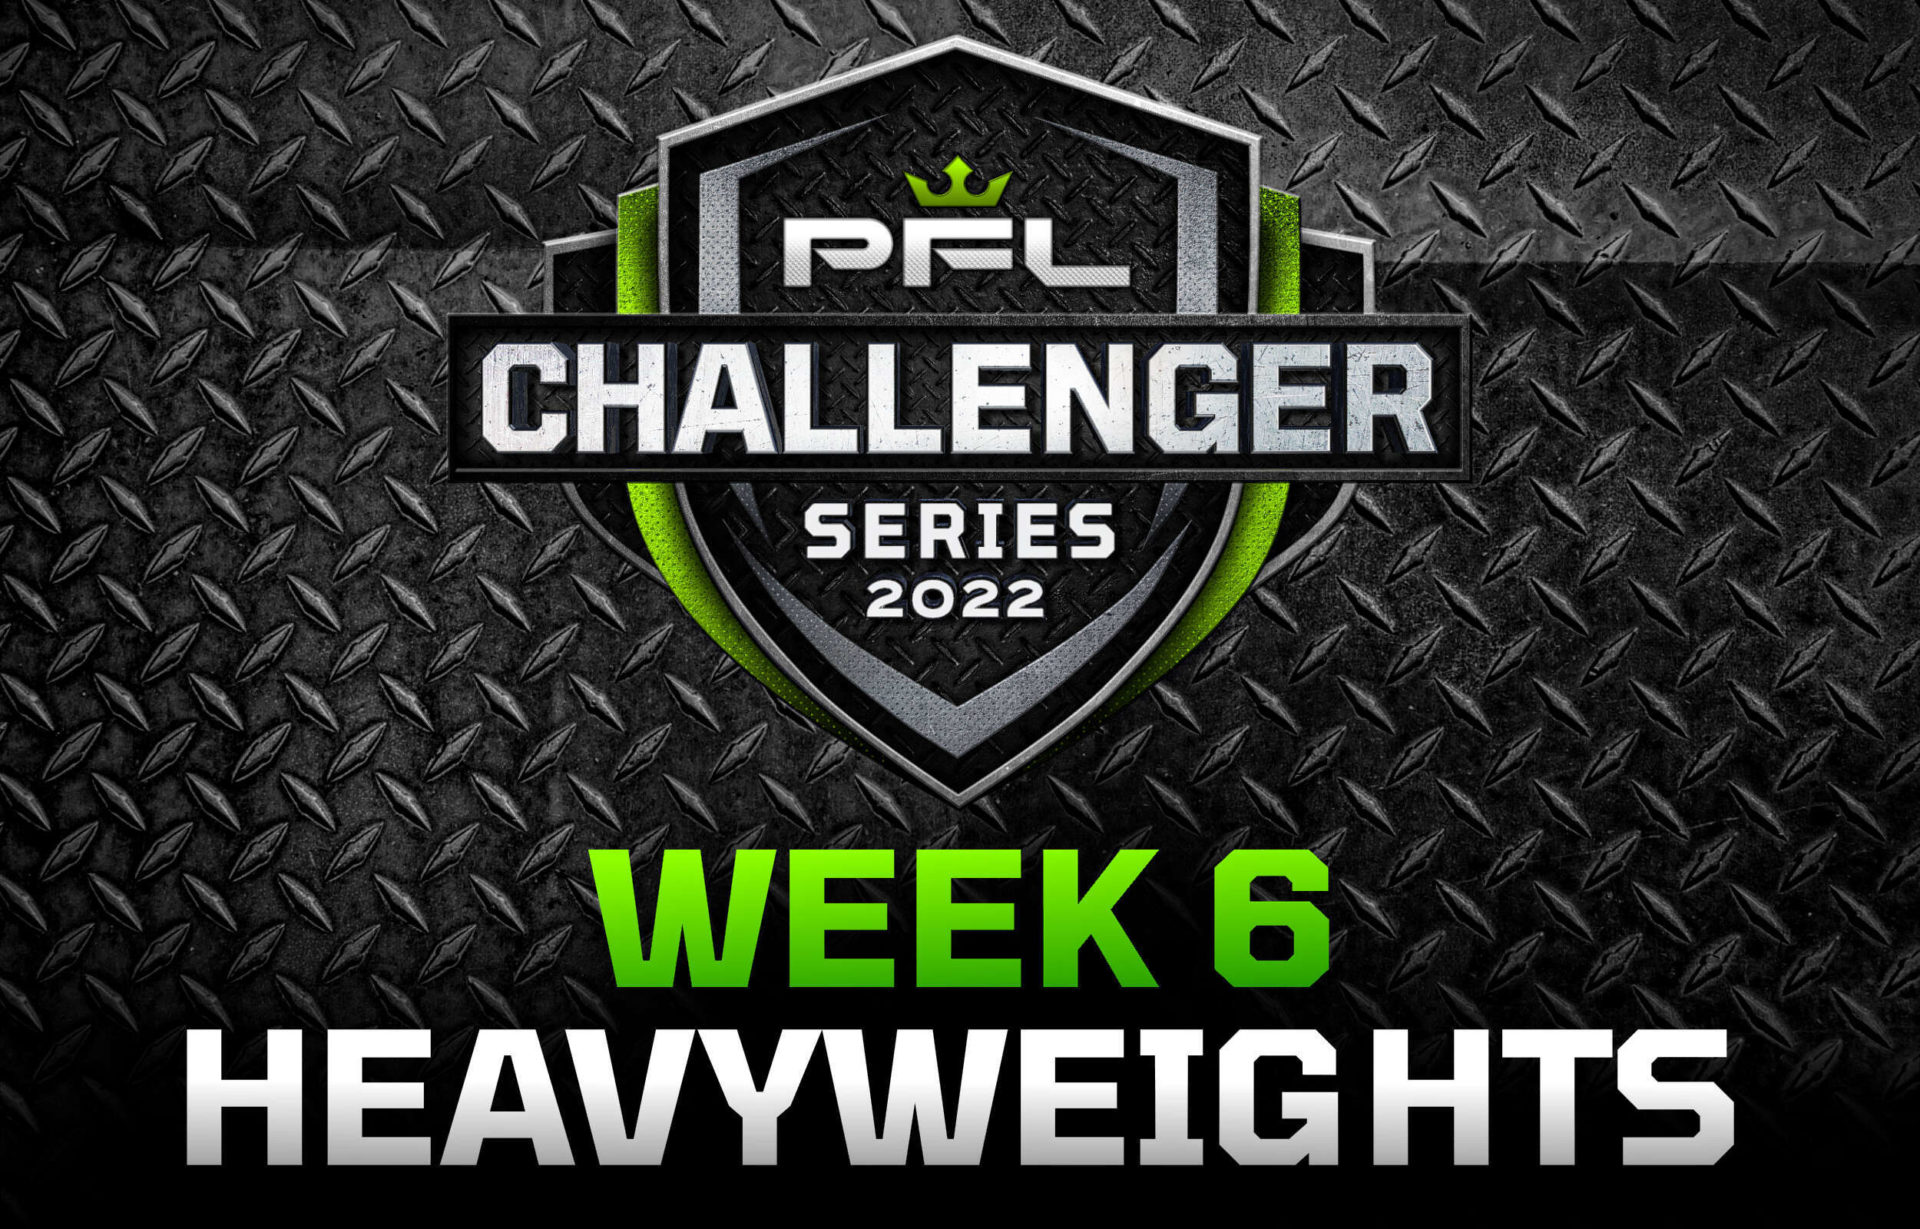 PFL Challenger Series 2022 - Week 6